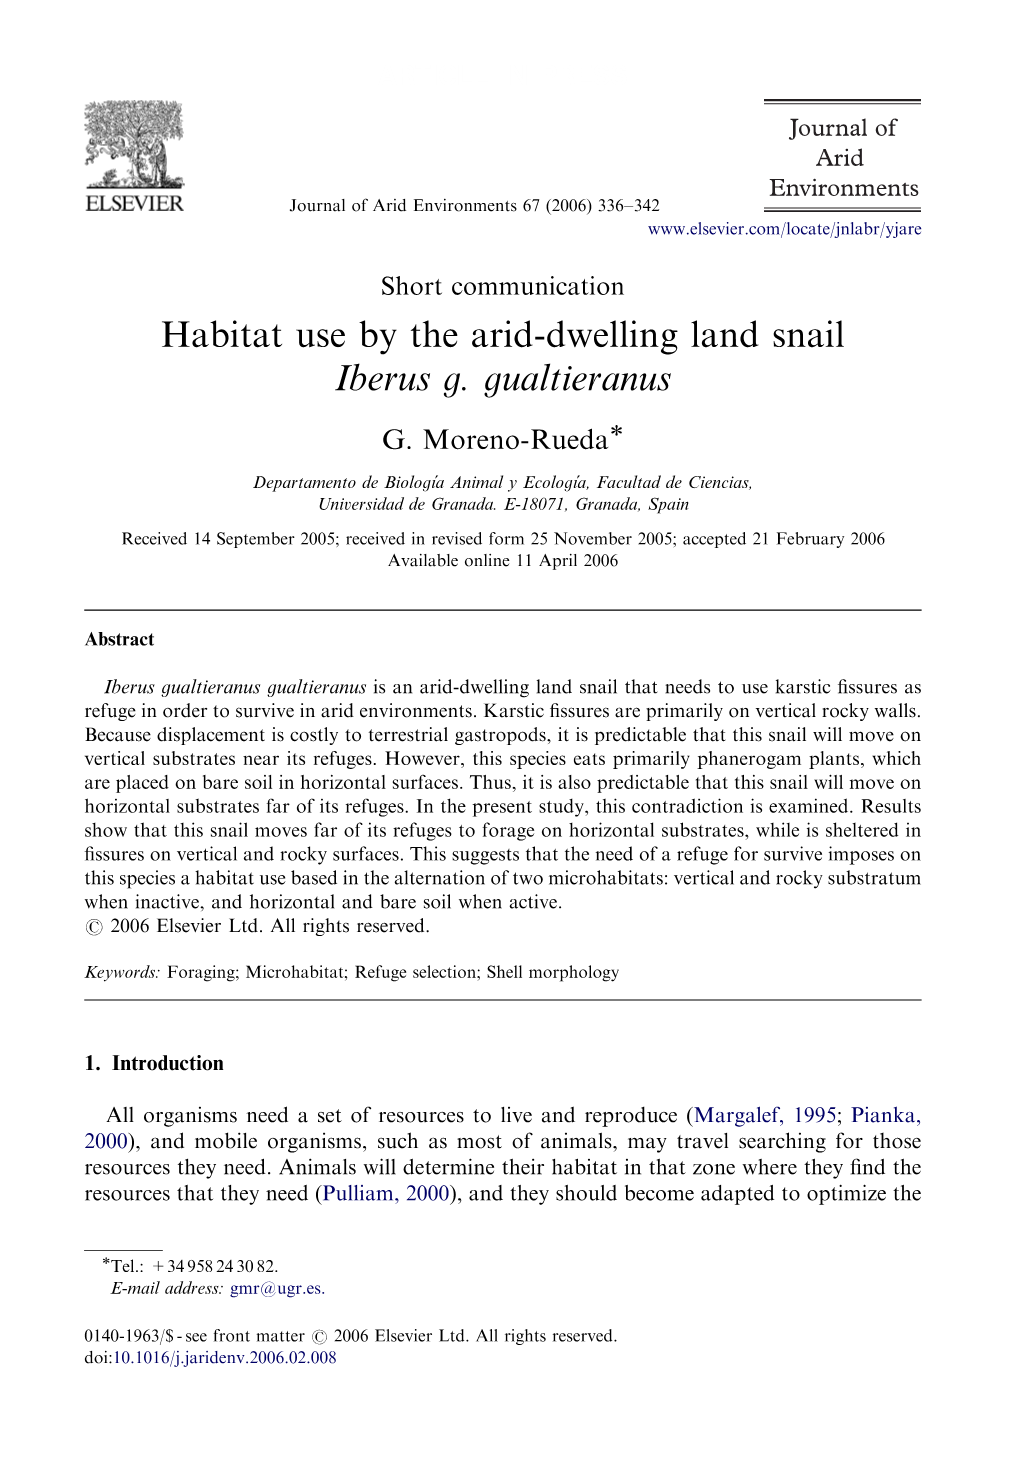 Habitat Use by the Arid-Dwelling Land Snail Iberus G. Gualtieranus